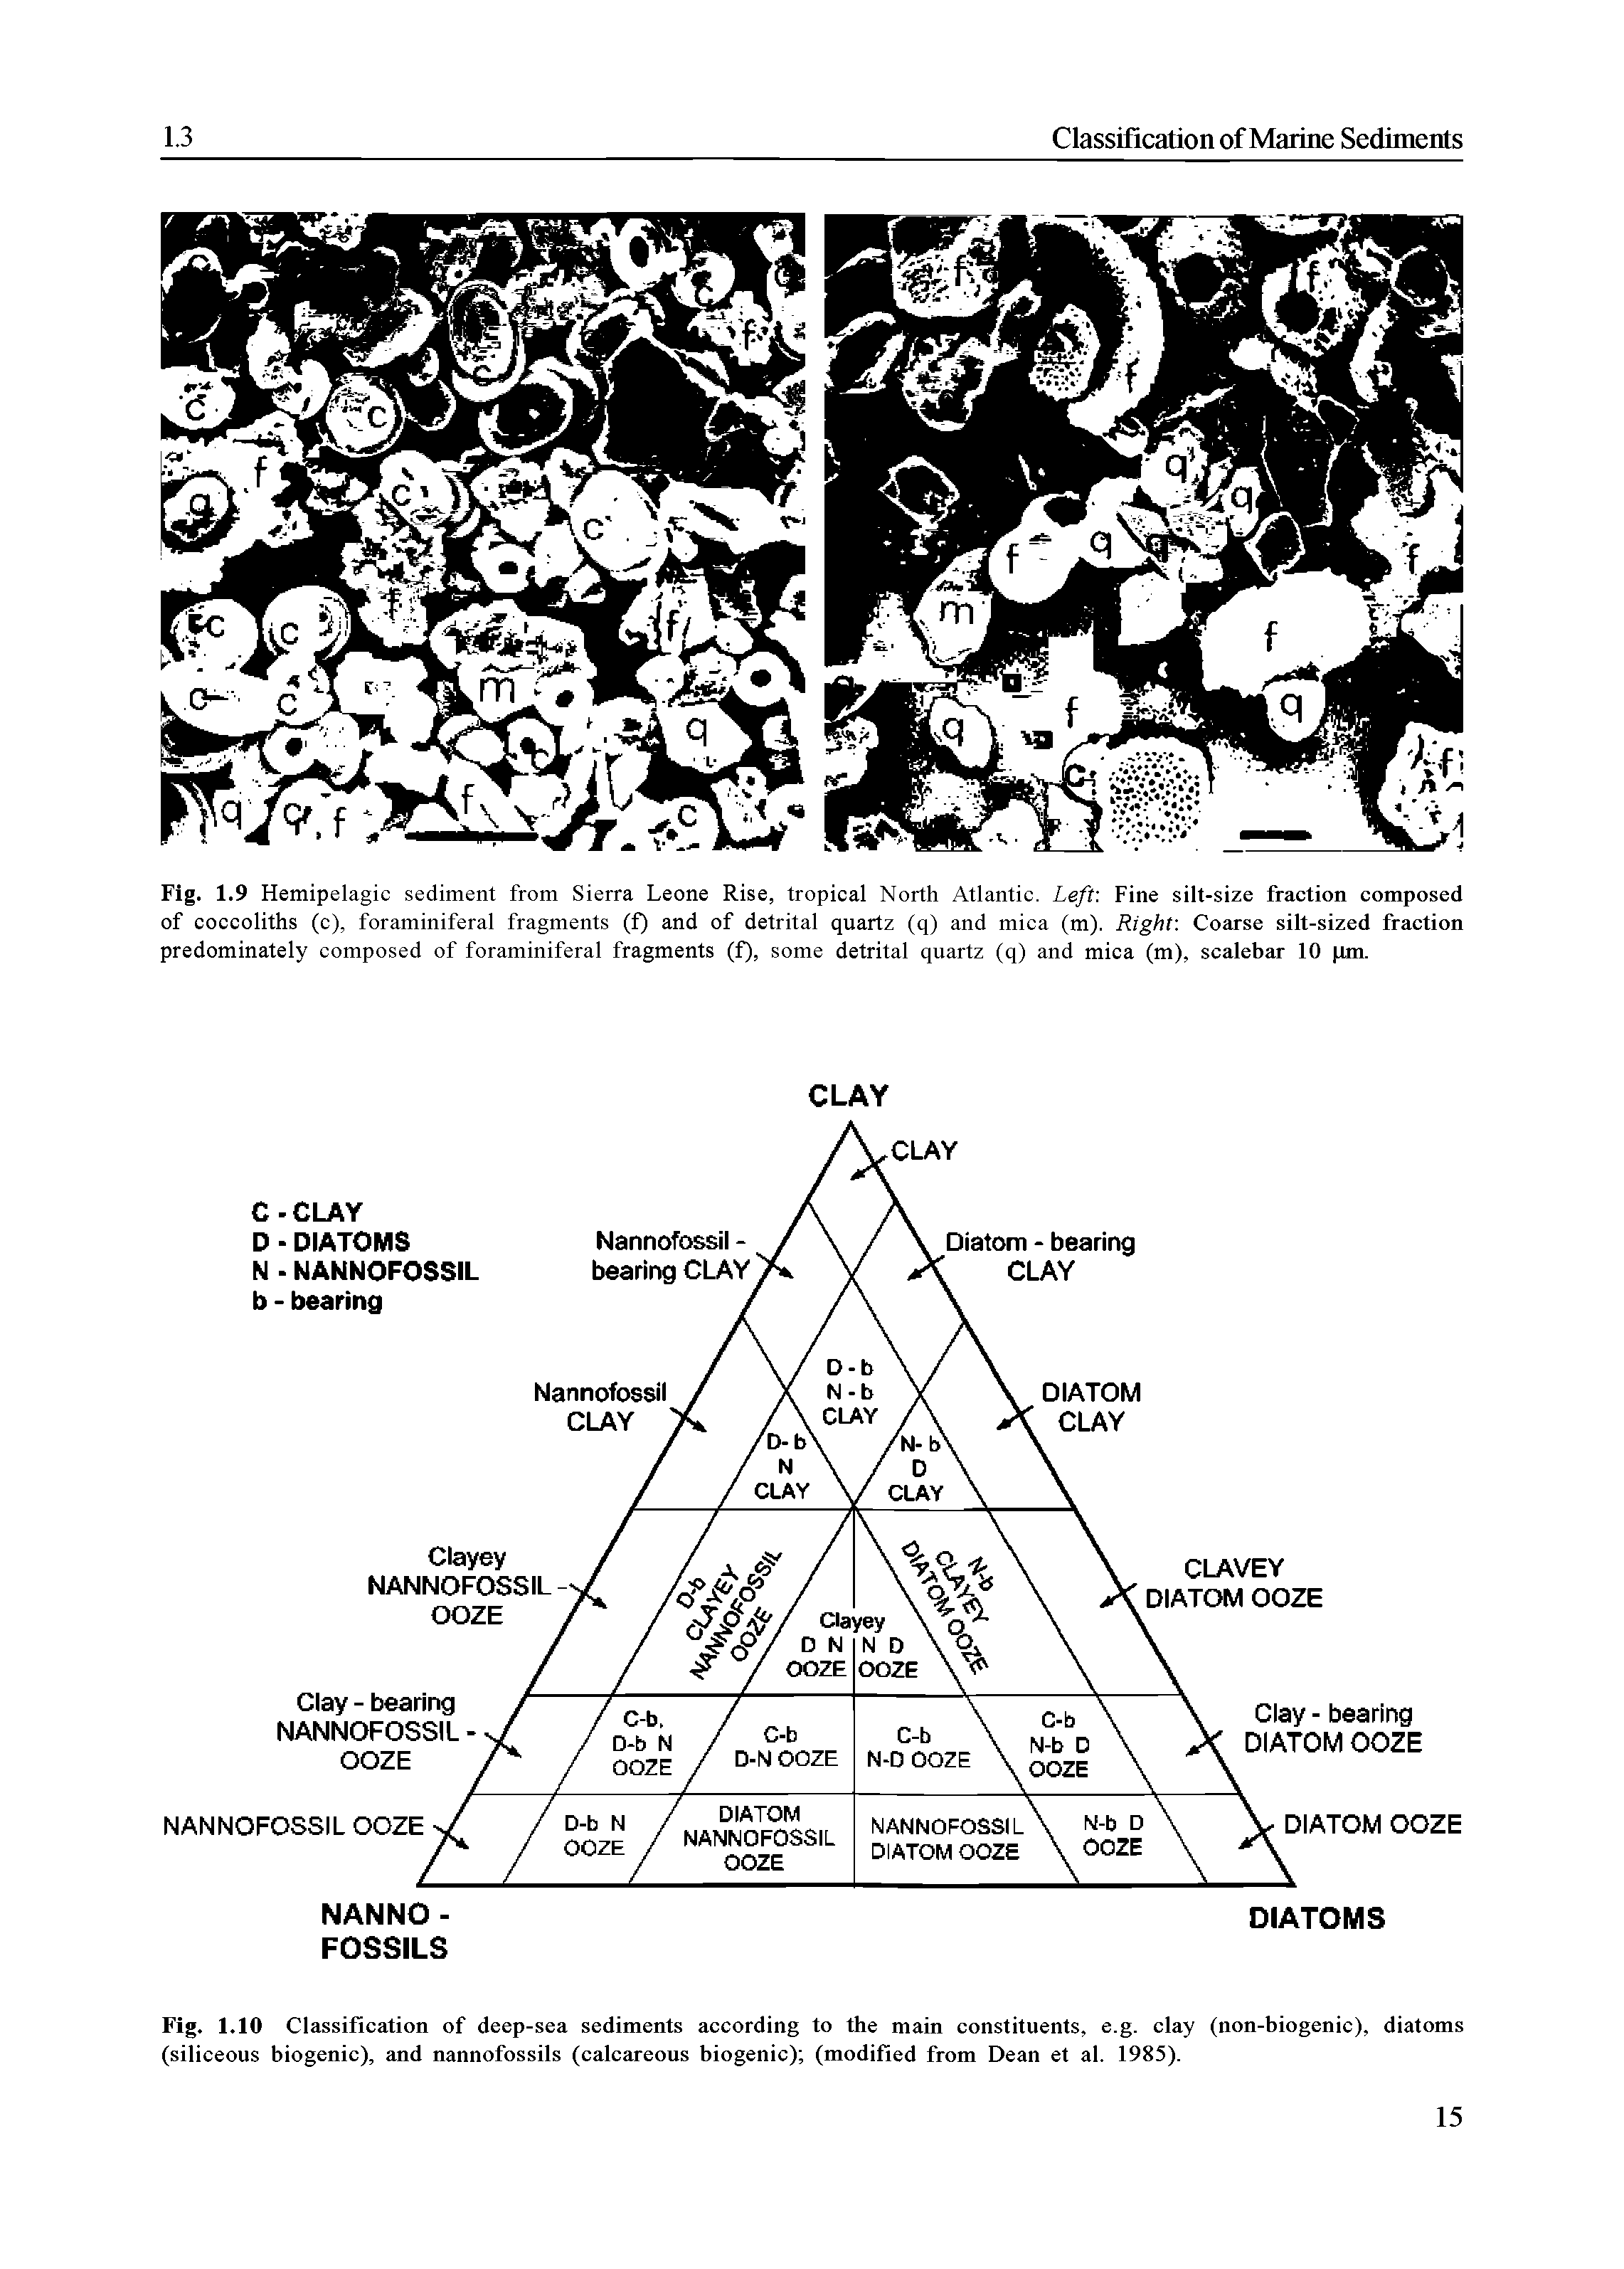 Fig. 1.10 Classification of deep-sea sediments according to the main constituents, e.g. clay (non-biogenic), diatoms (siliceous biogenic), and nannofossils (calcareous biogenic) (modified from Dean et al. 1985).